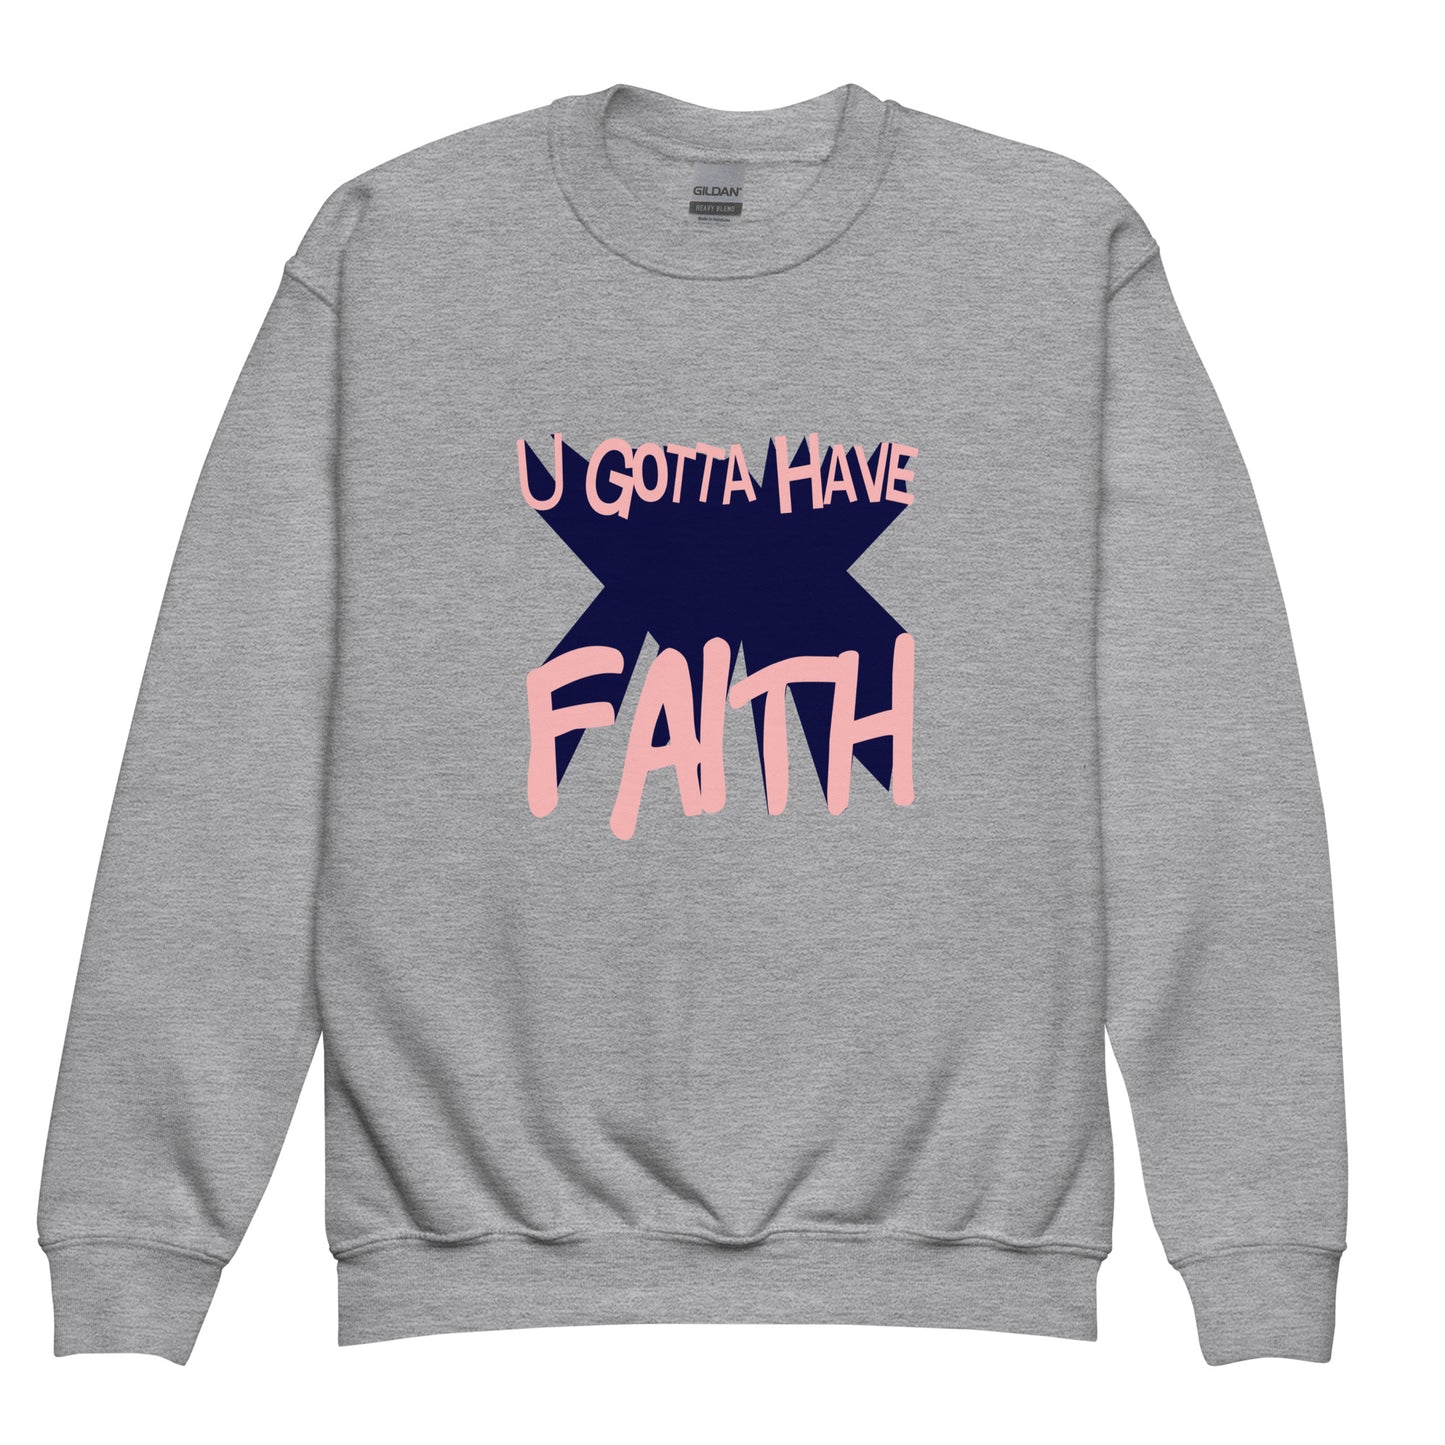 U Gotta Have Faith Youth Sweatshirt